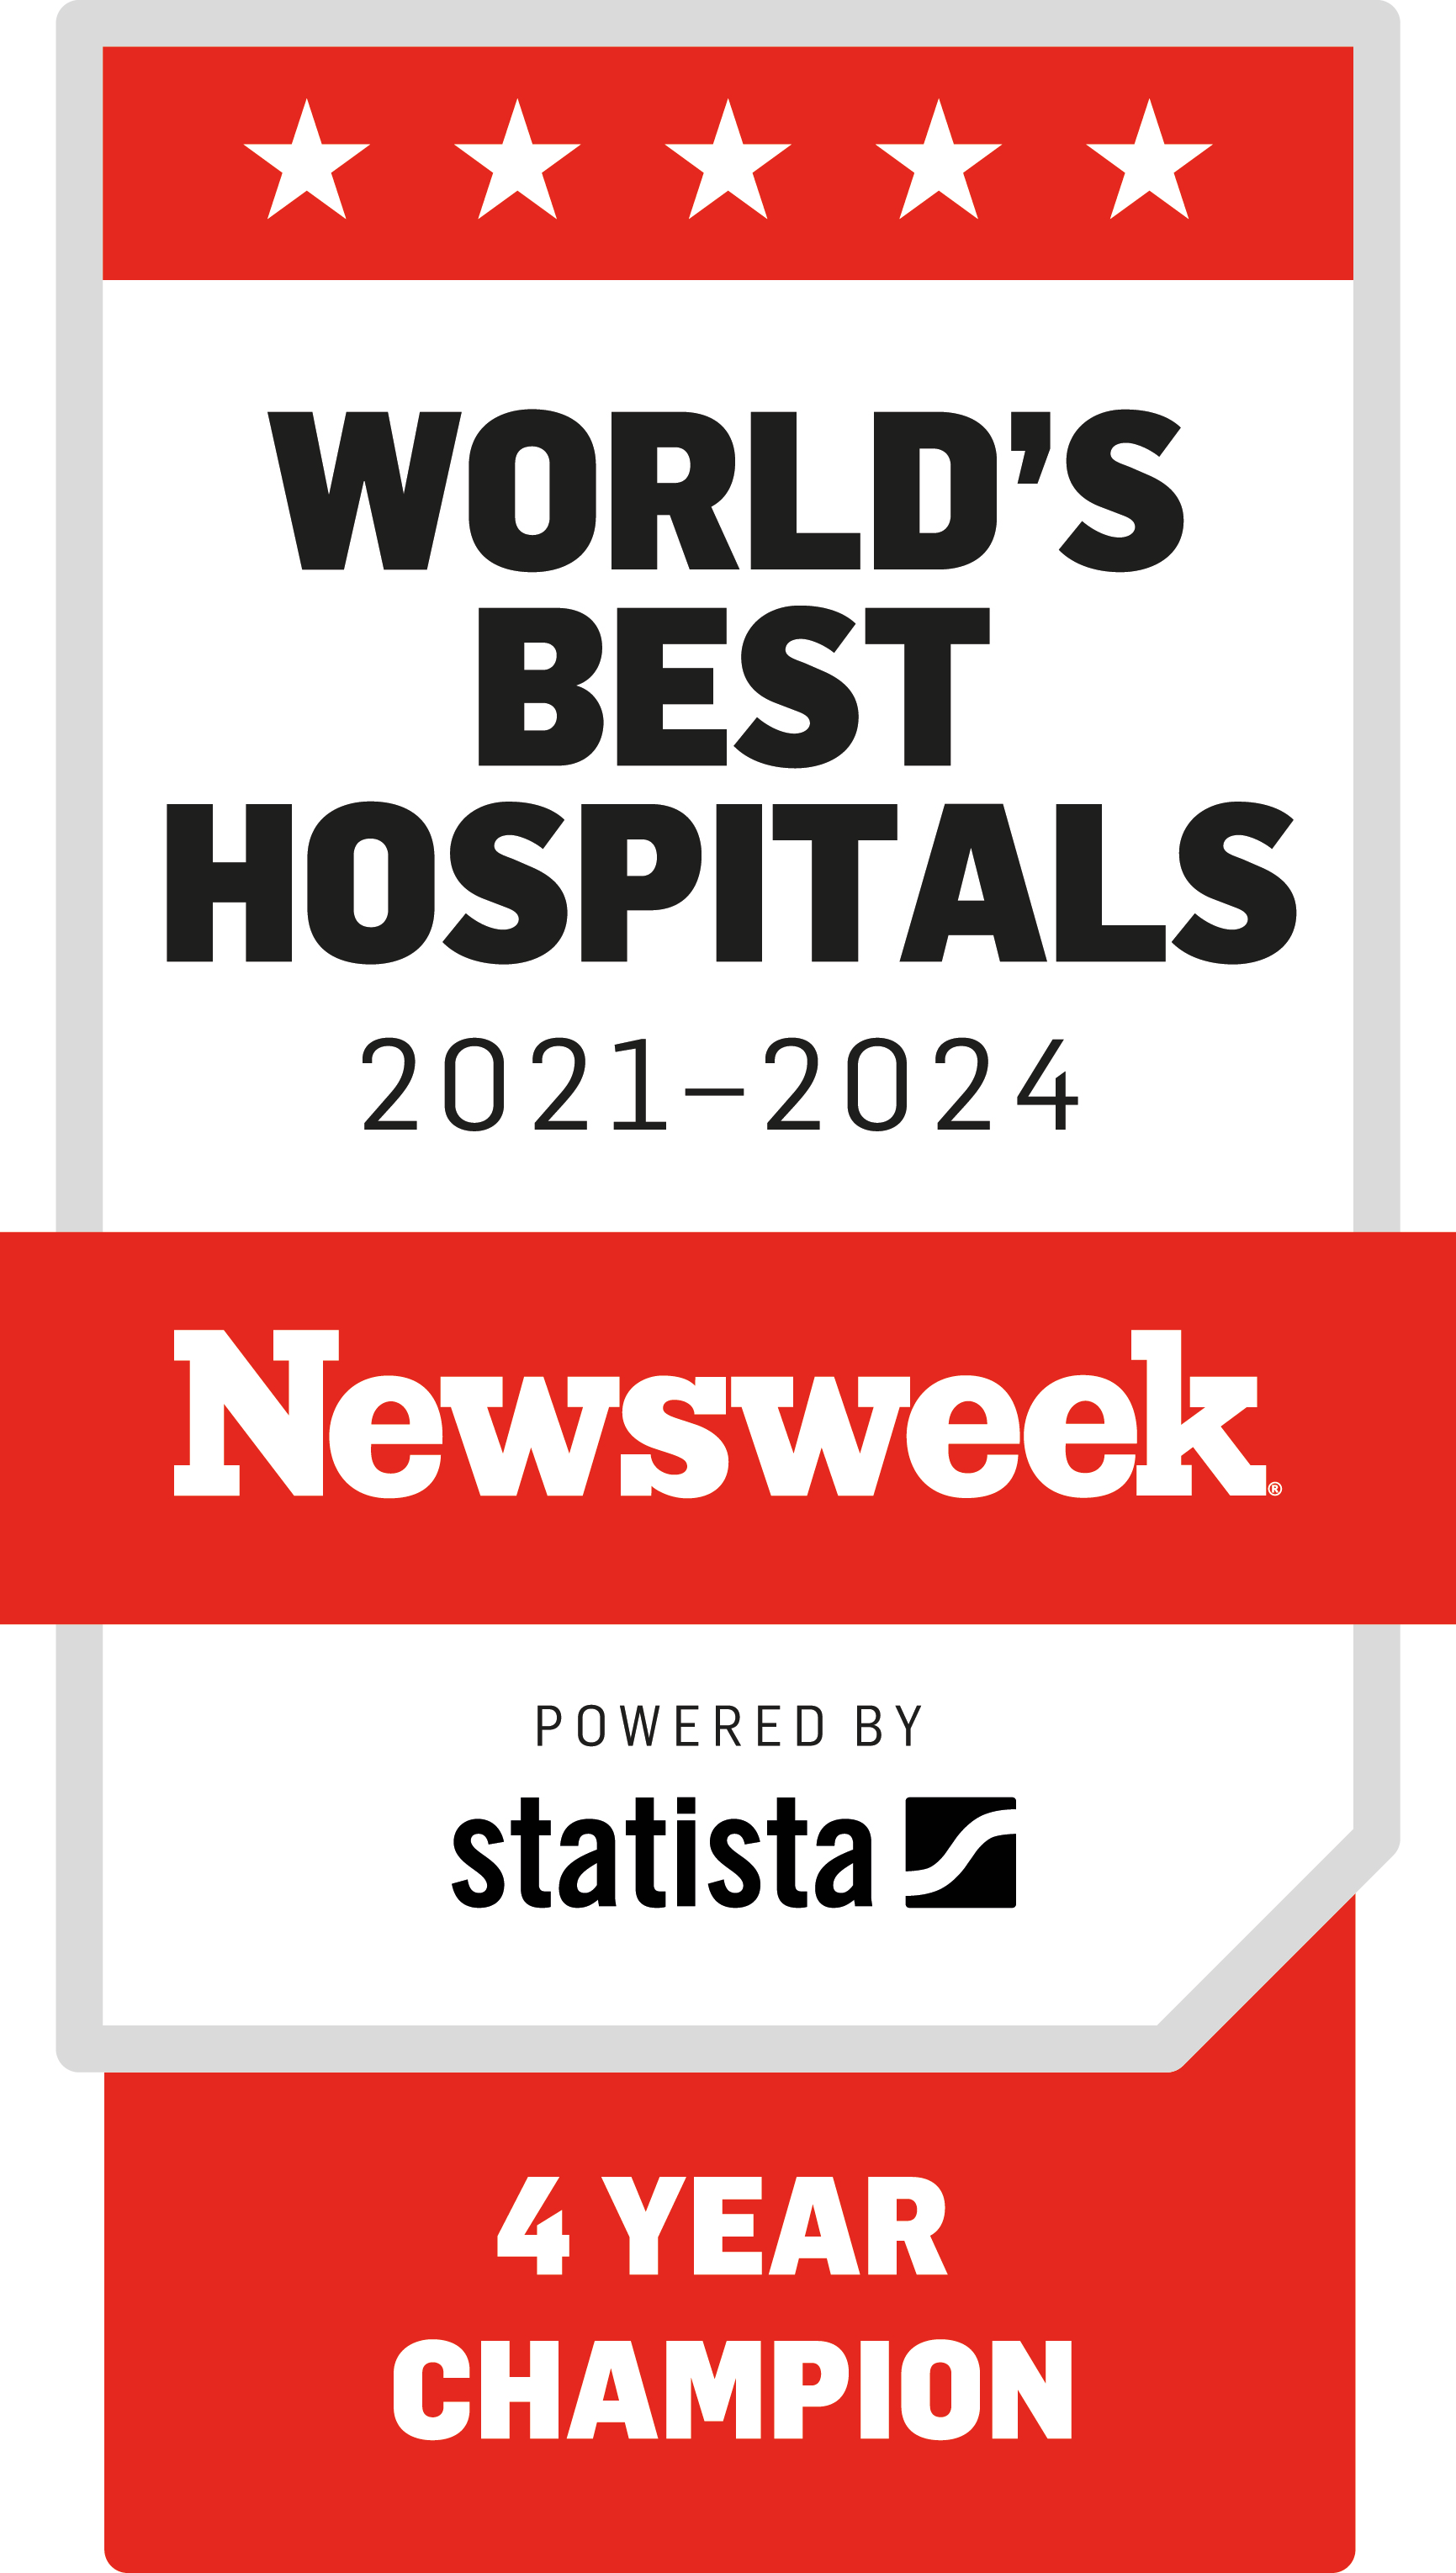 newsweek-logo-new_1_new.png